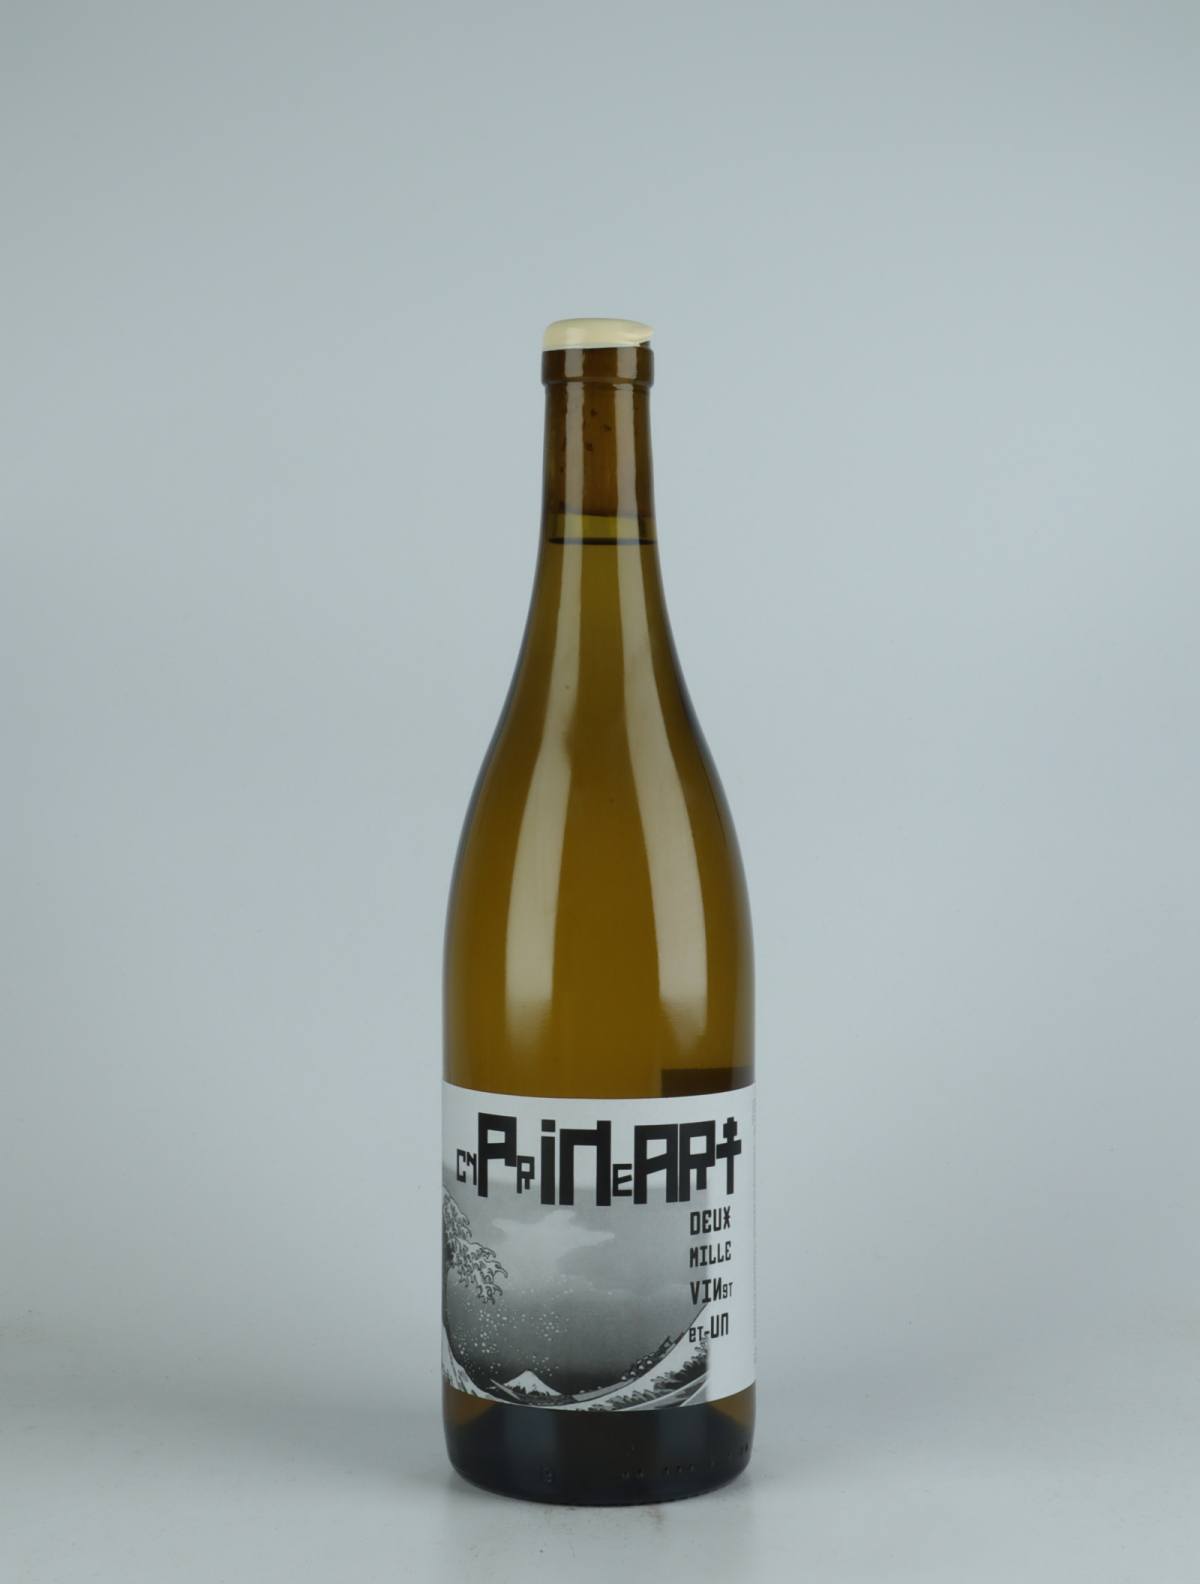 A bottle 2021 Bourgogne Blanc Côte Chalonnaise - Cyprineart White wine from Benoit Delorme, Burgundy in France